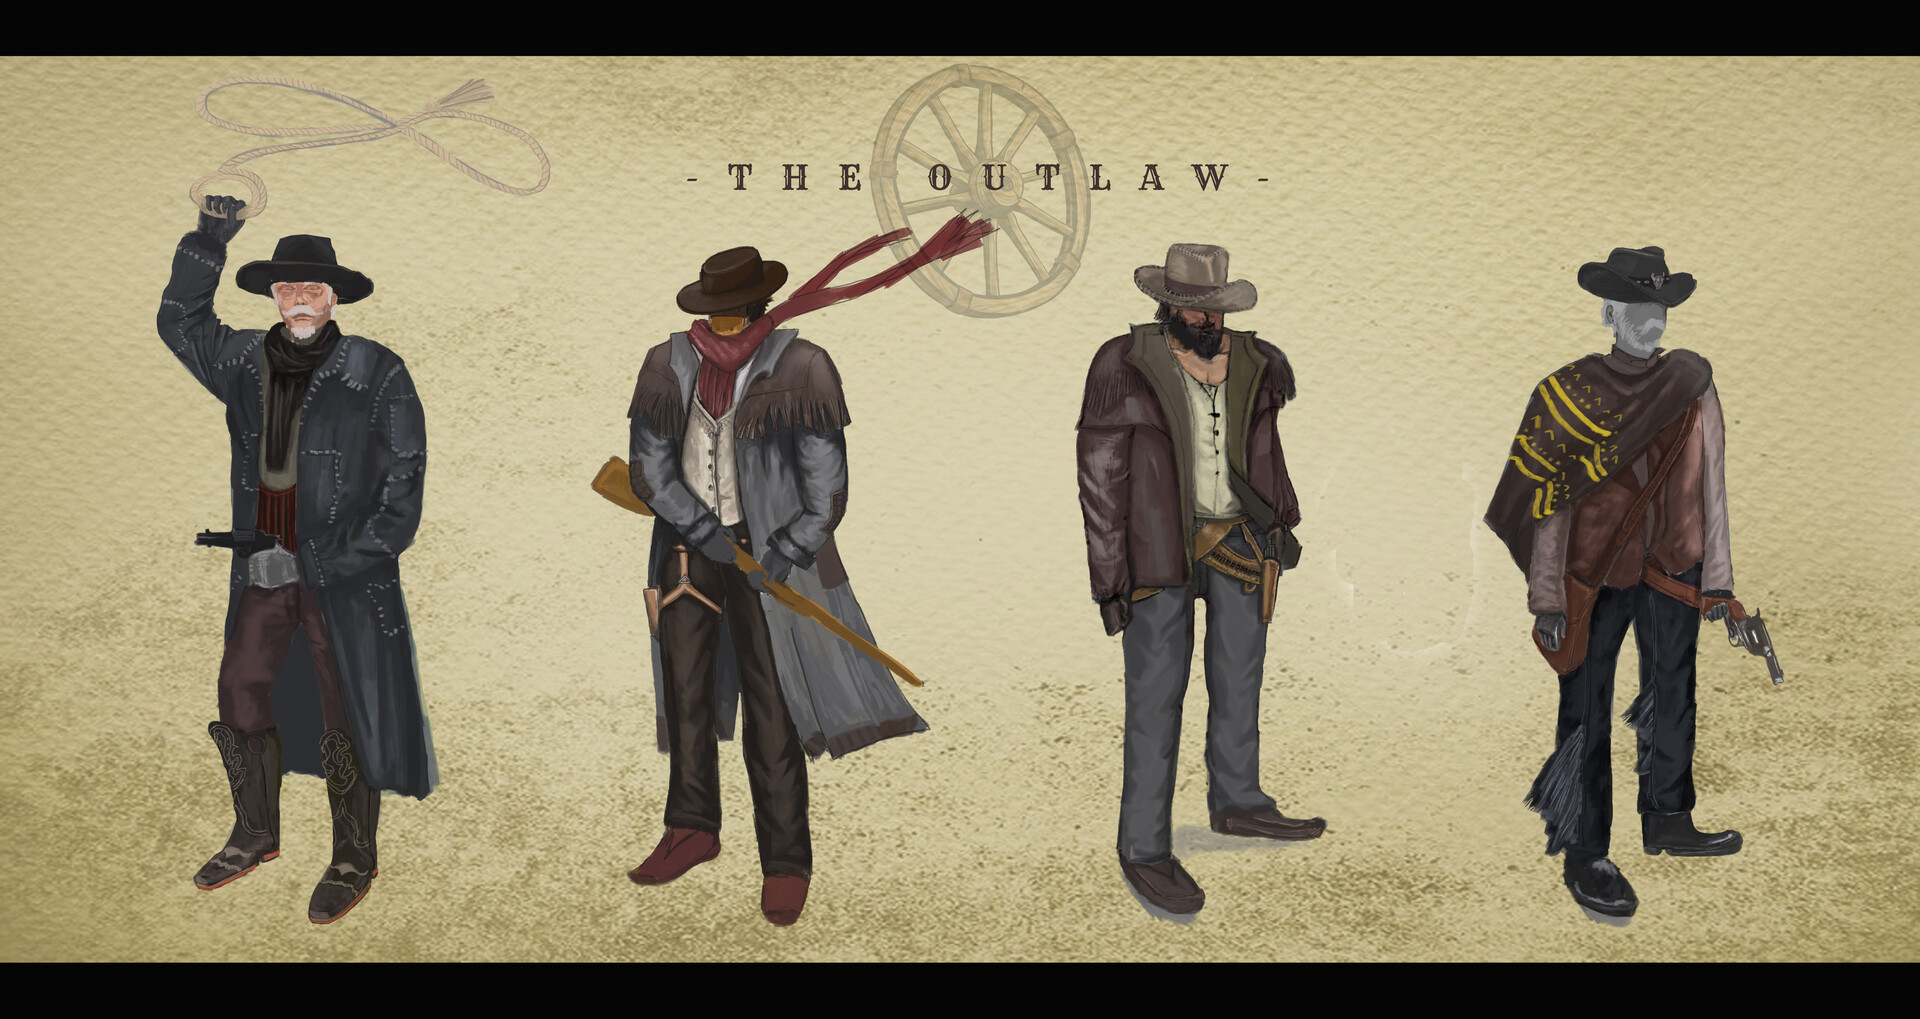 ArtStation - The Outlaw